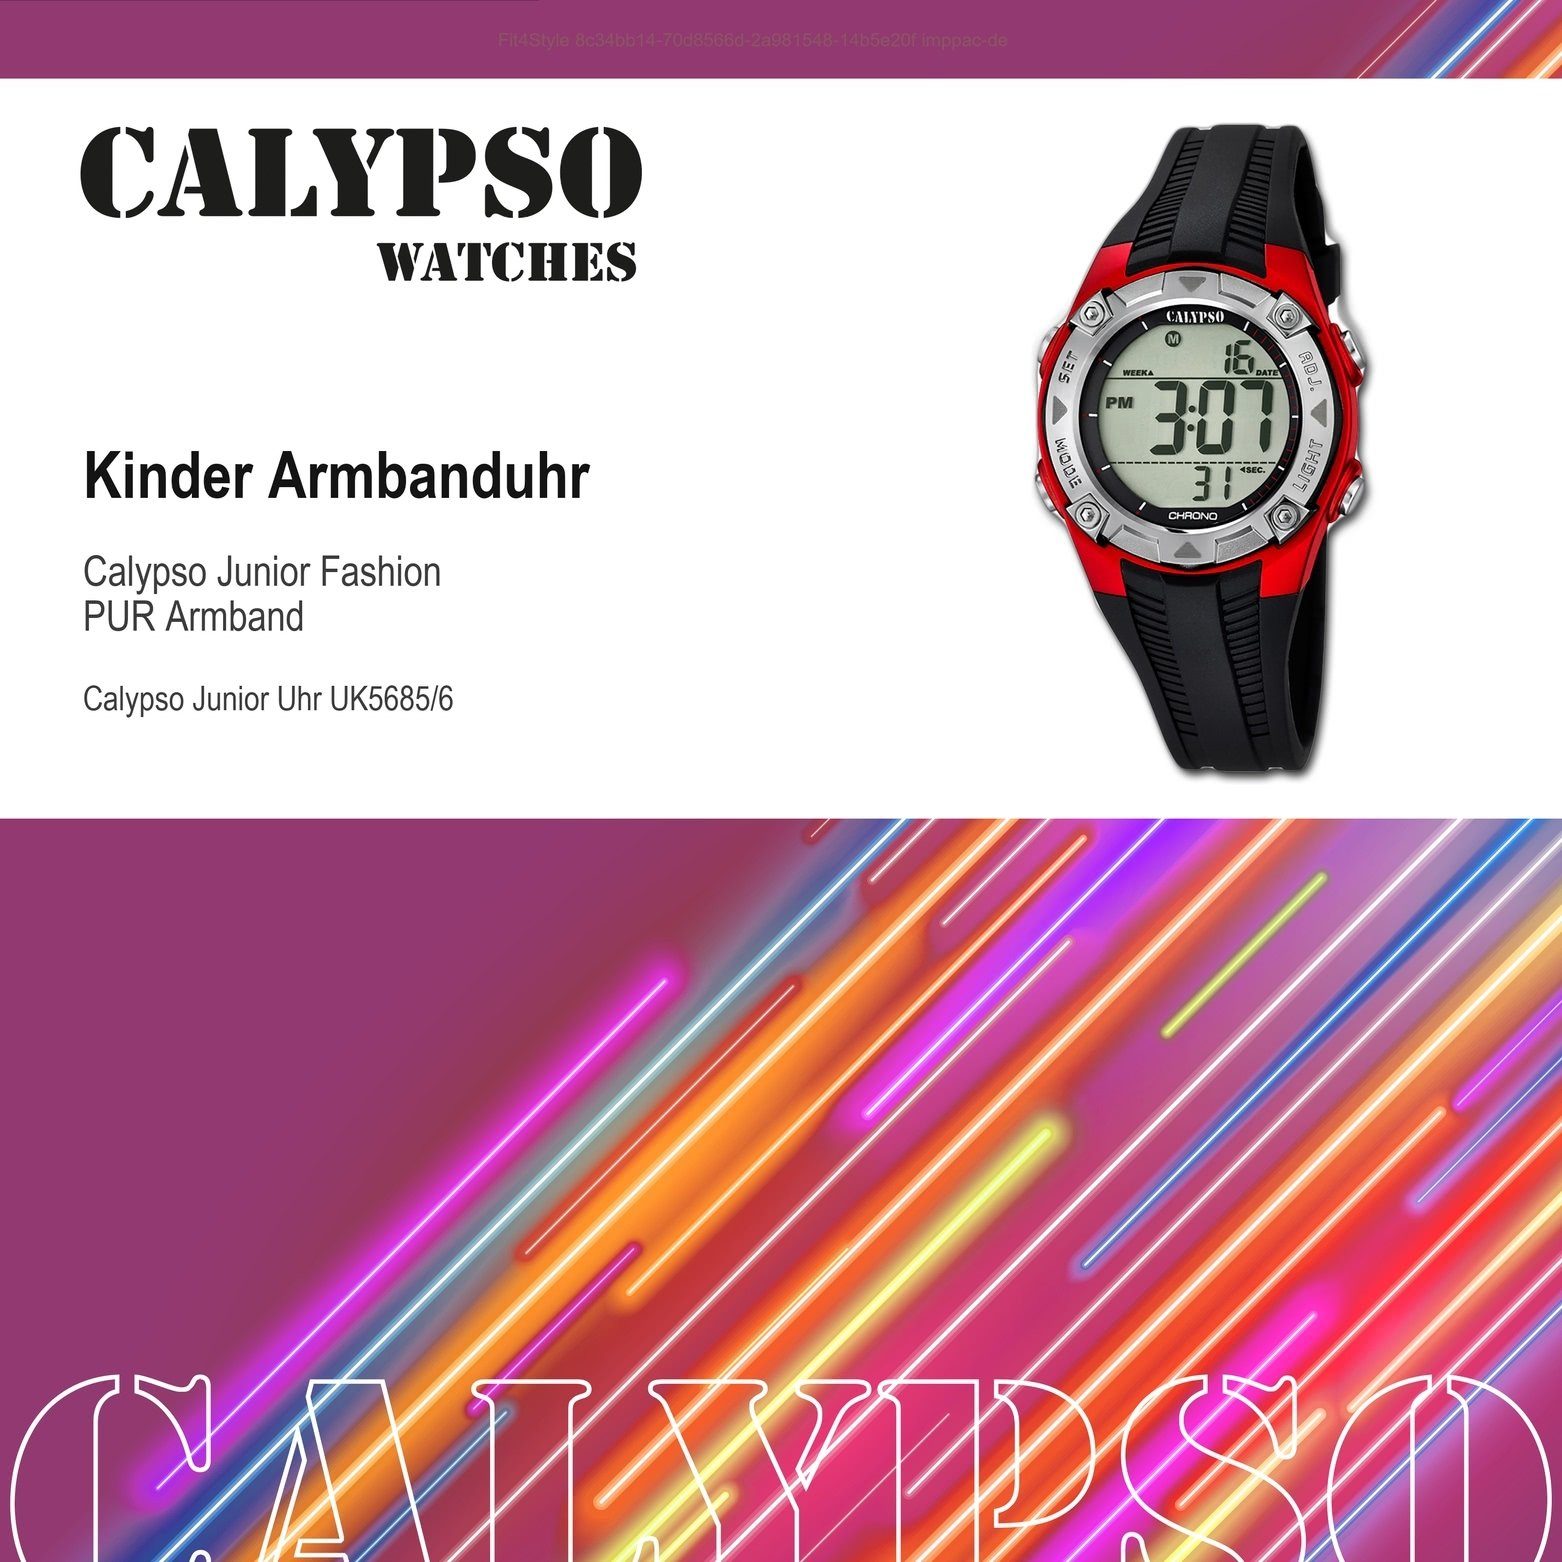 schwarz, Calypso Fashion Kinder Kinder PURarmband Uhr Digitaluhr CALYPSO K5685/6 Armbanduhr rund, WATCHES Kunststoffband,